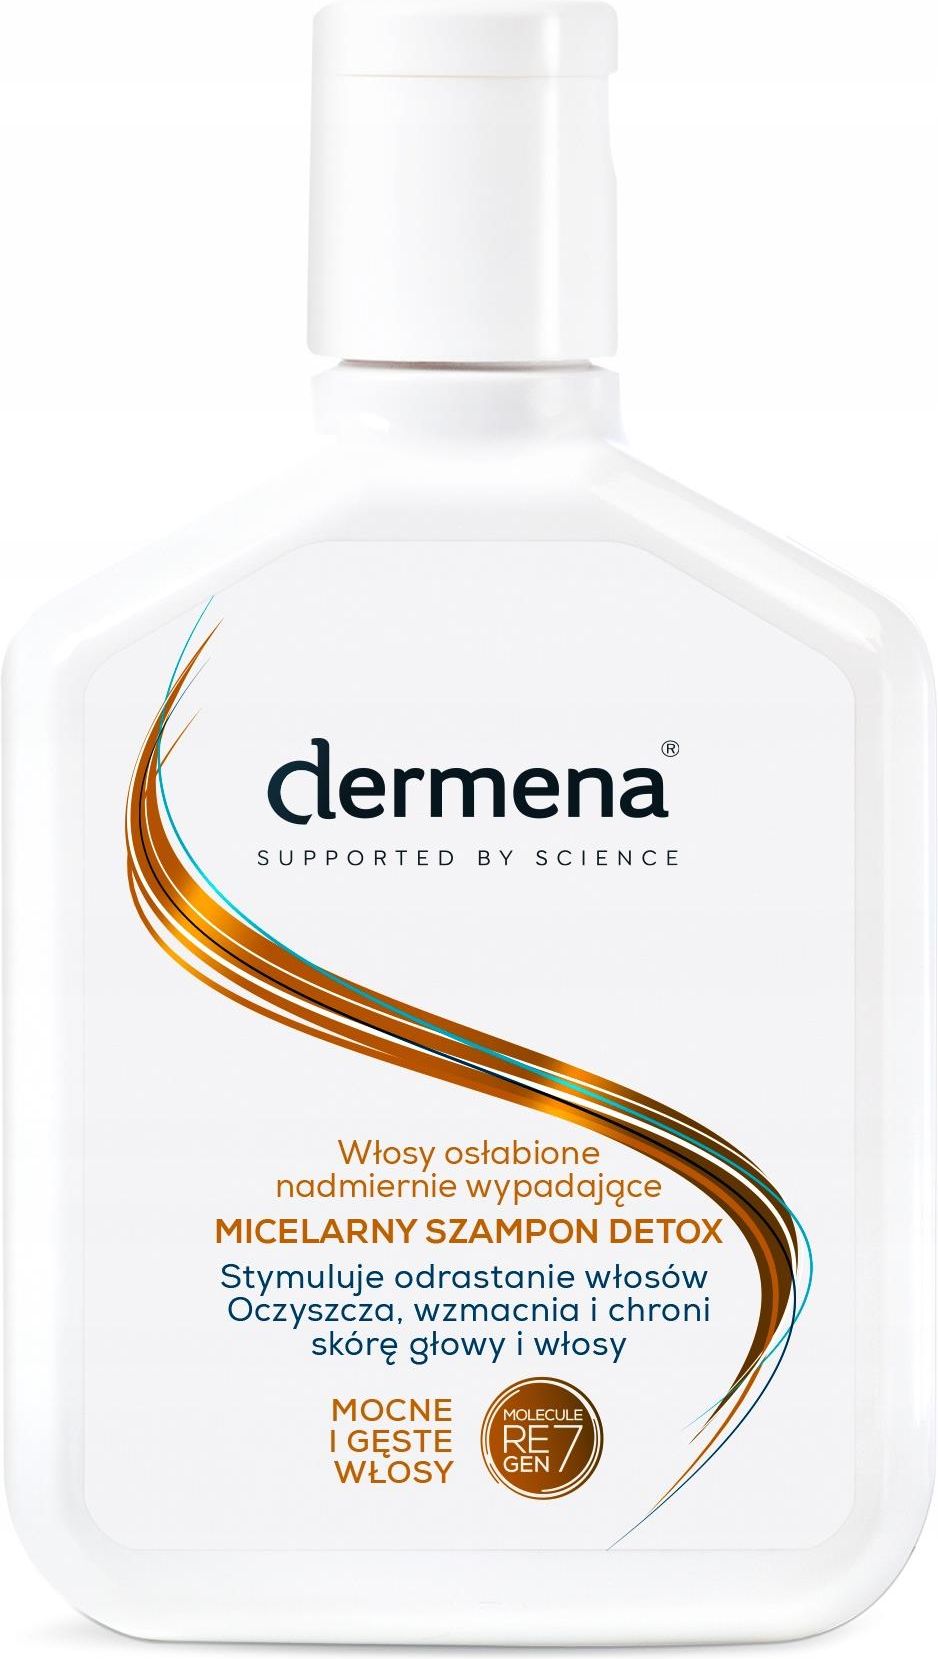 szampon dermena repair allegro